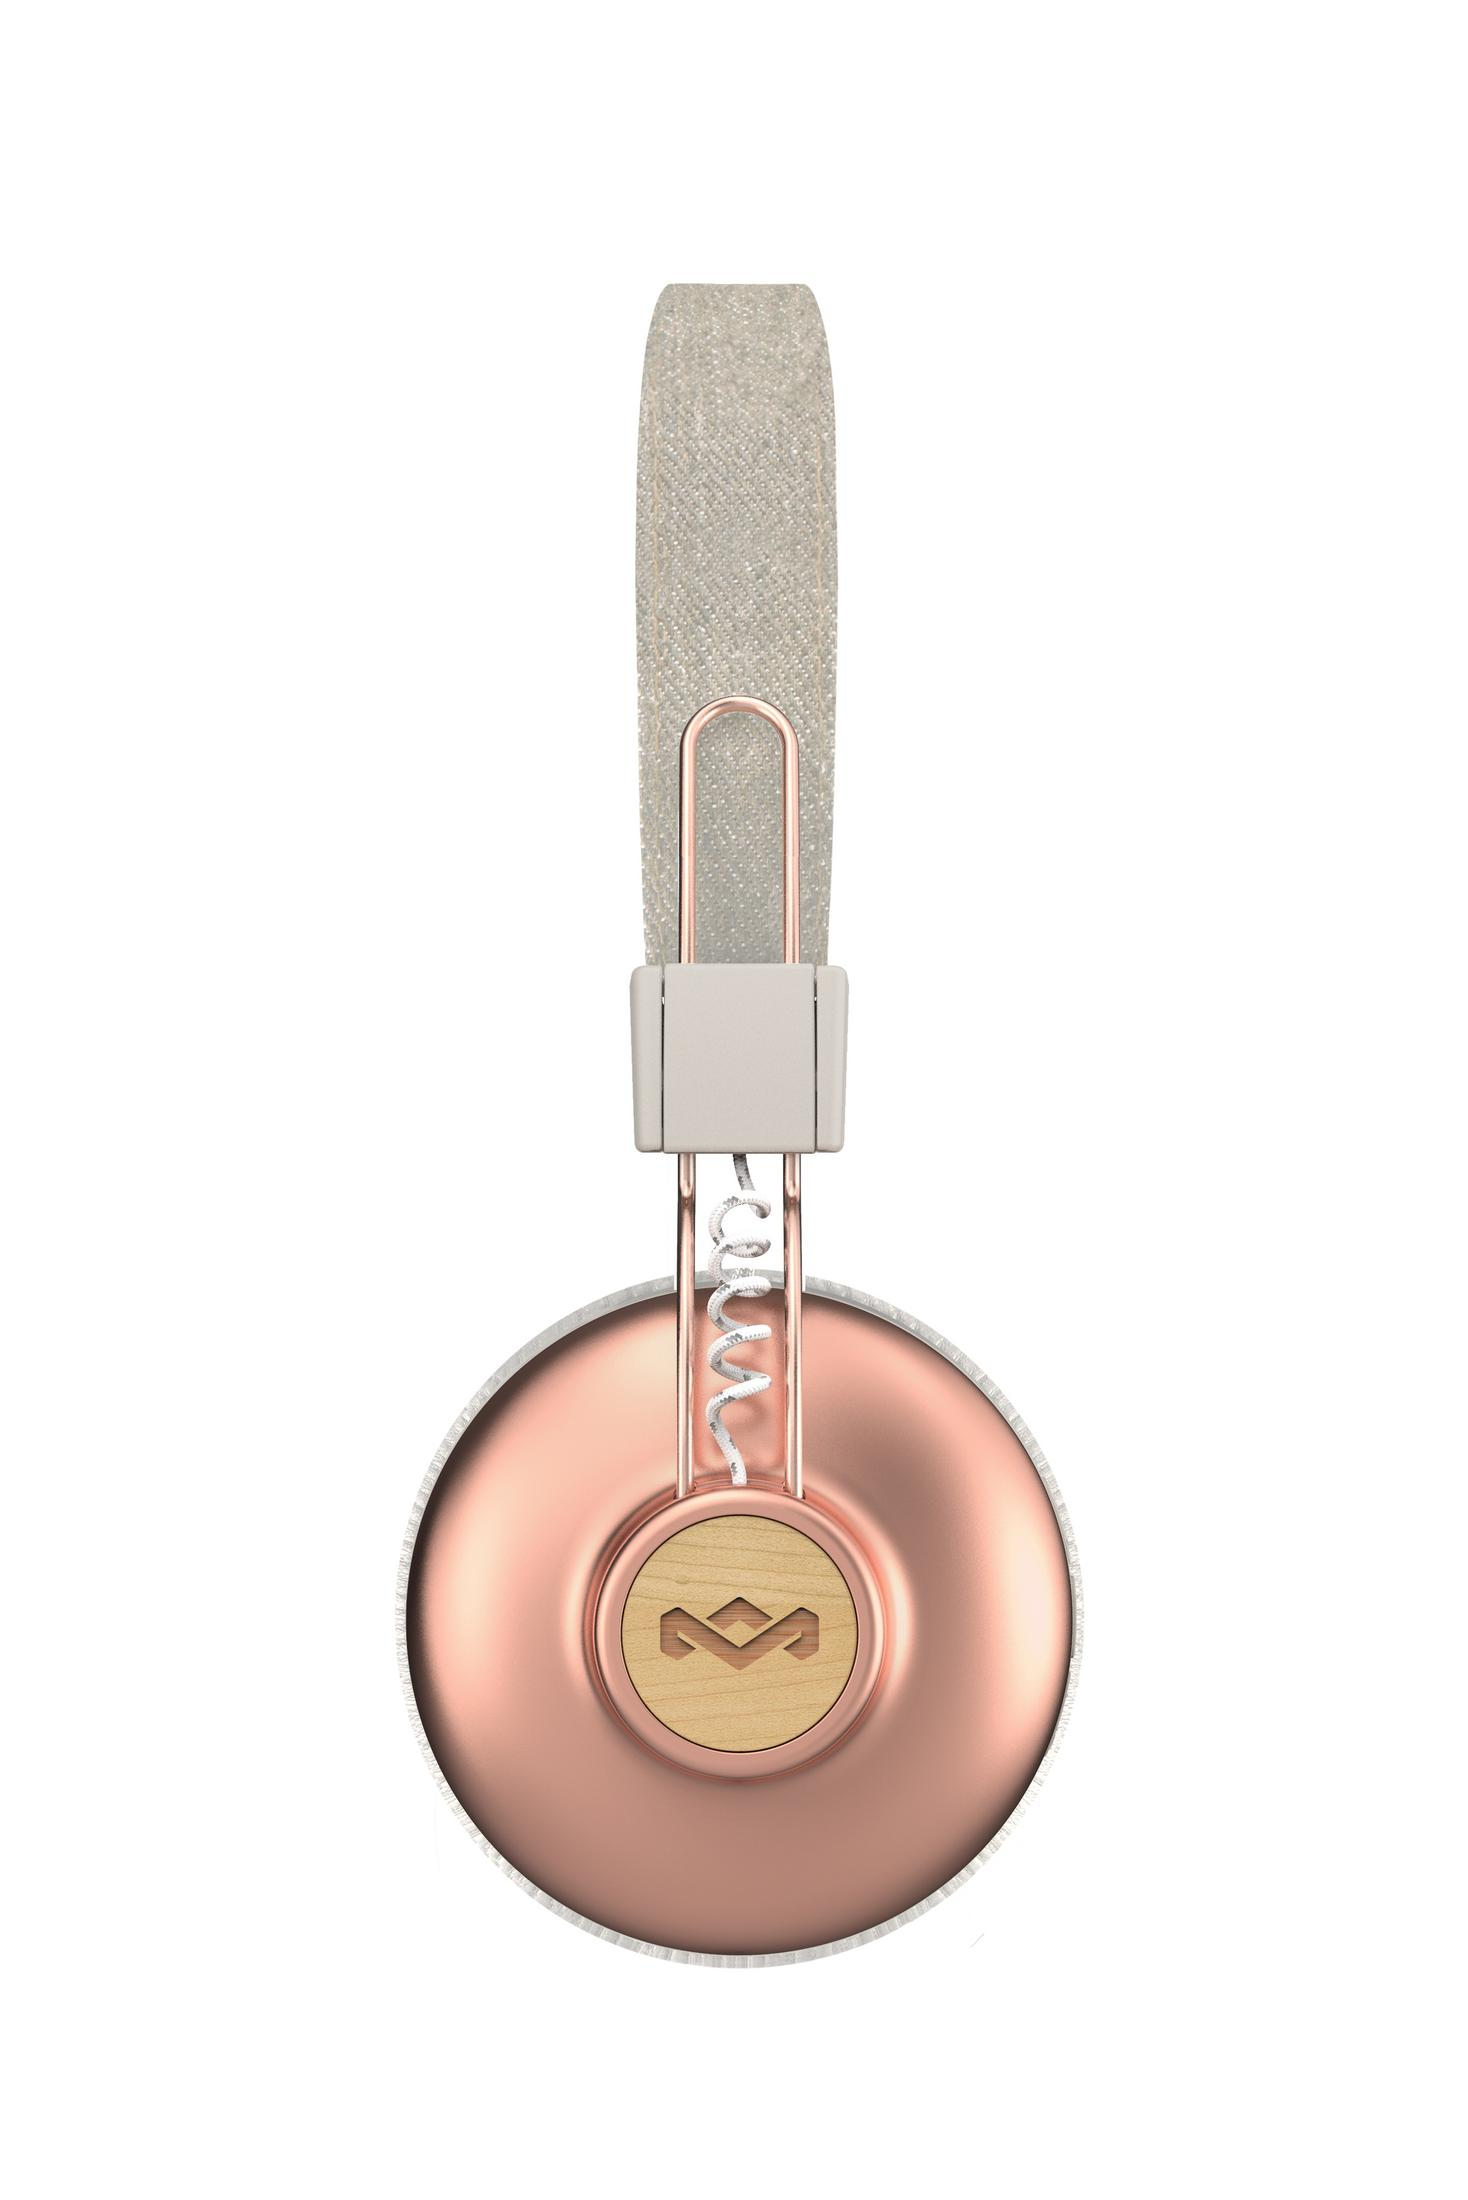 KUPFER, Copper EM-JH133-CP POSITIVE Kopfhörer OF Bluetooth WIRELESS On-ear HOUSE MARLEY VIBRATION